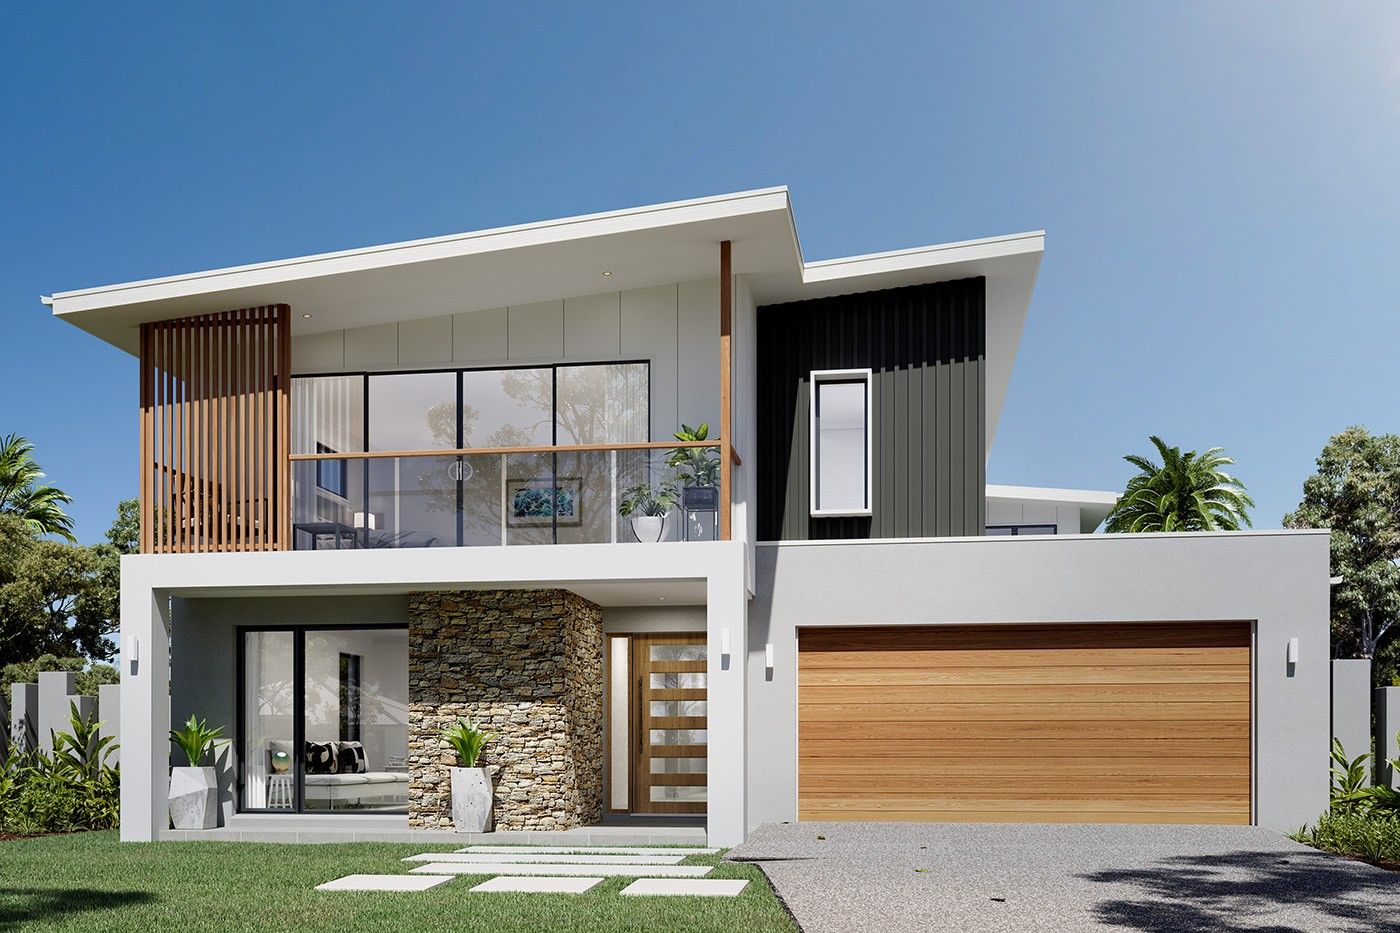 5 bedrooms New House & Land in Lot 438 Regina Street COOMERA QLD, 4209